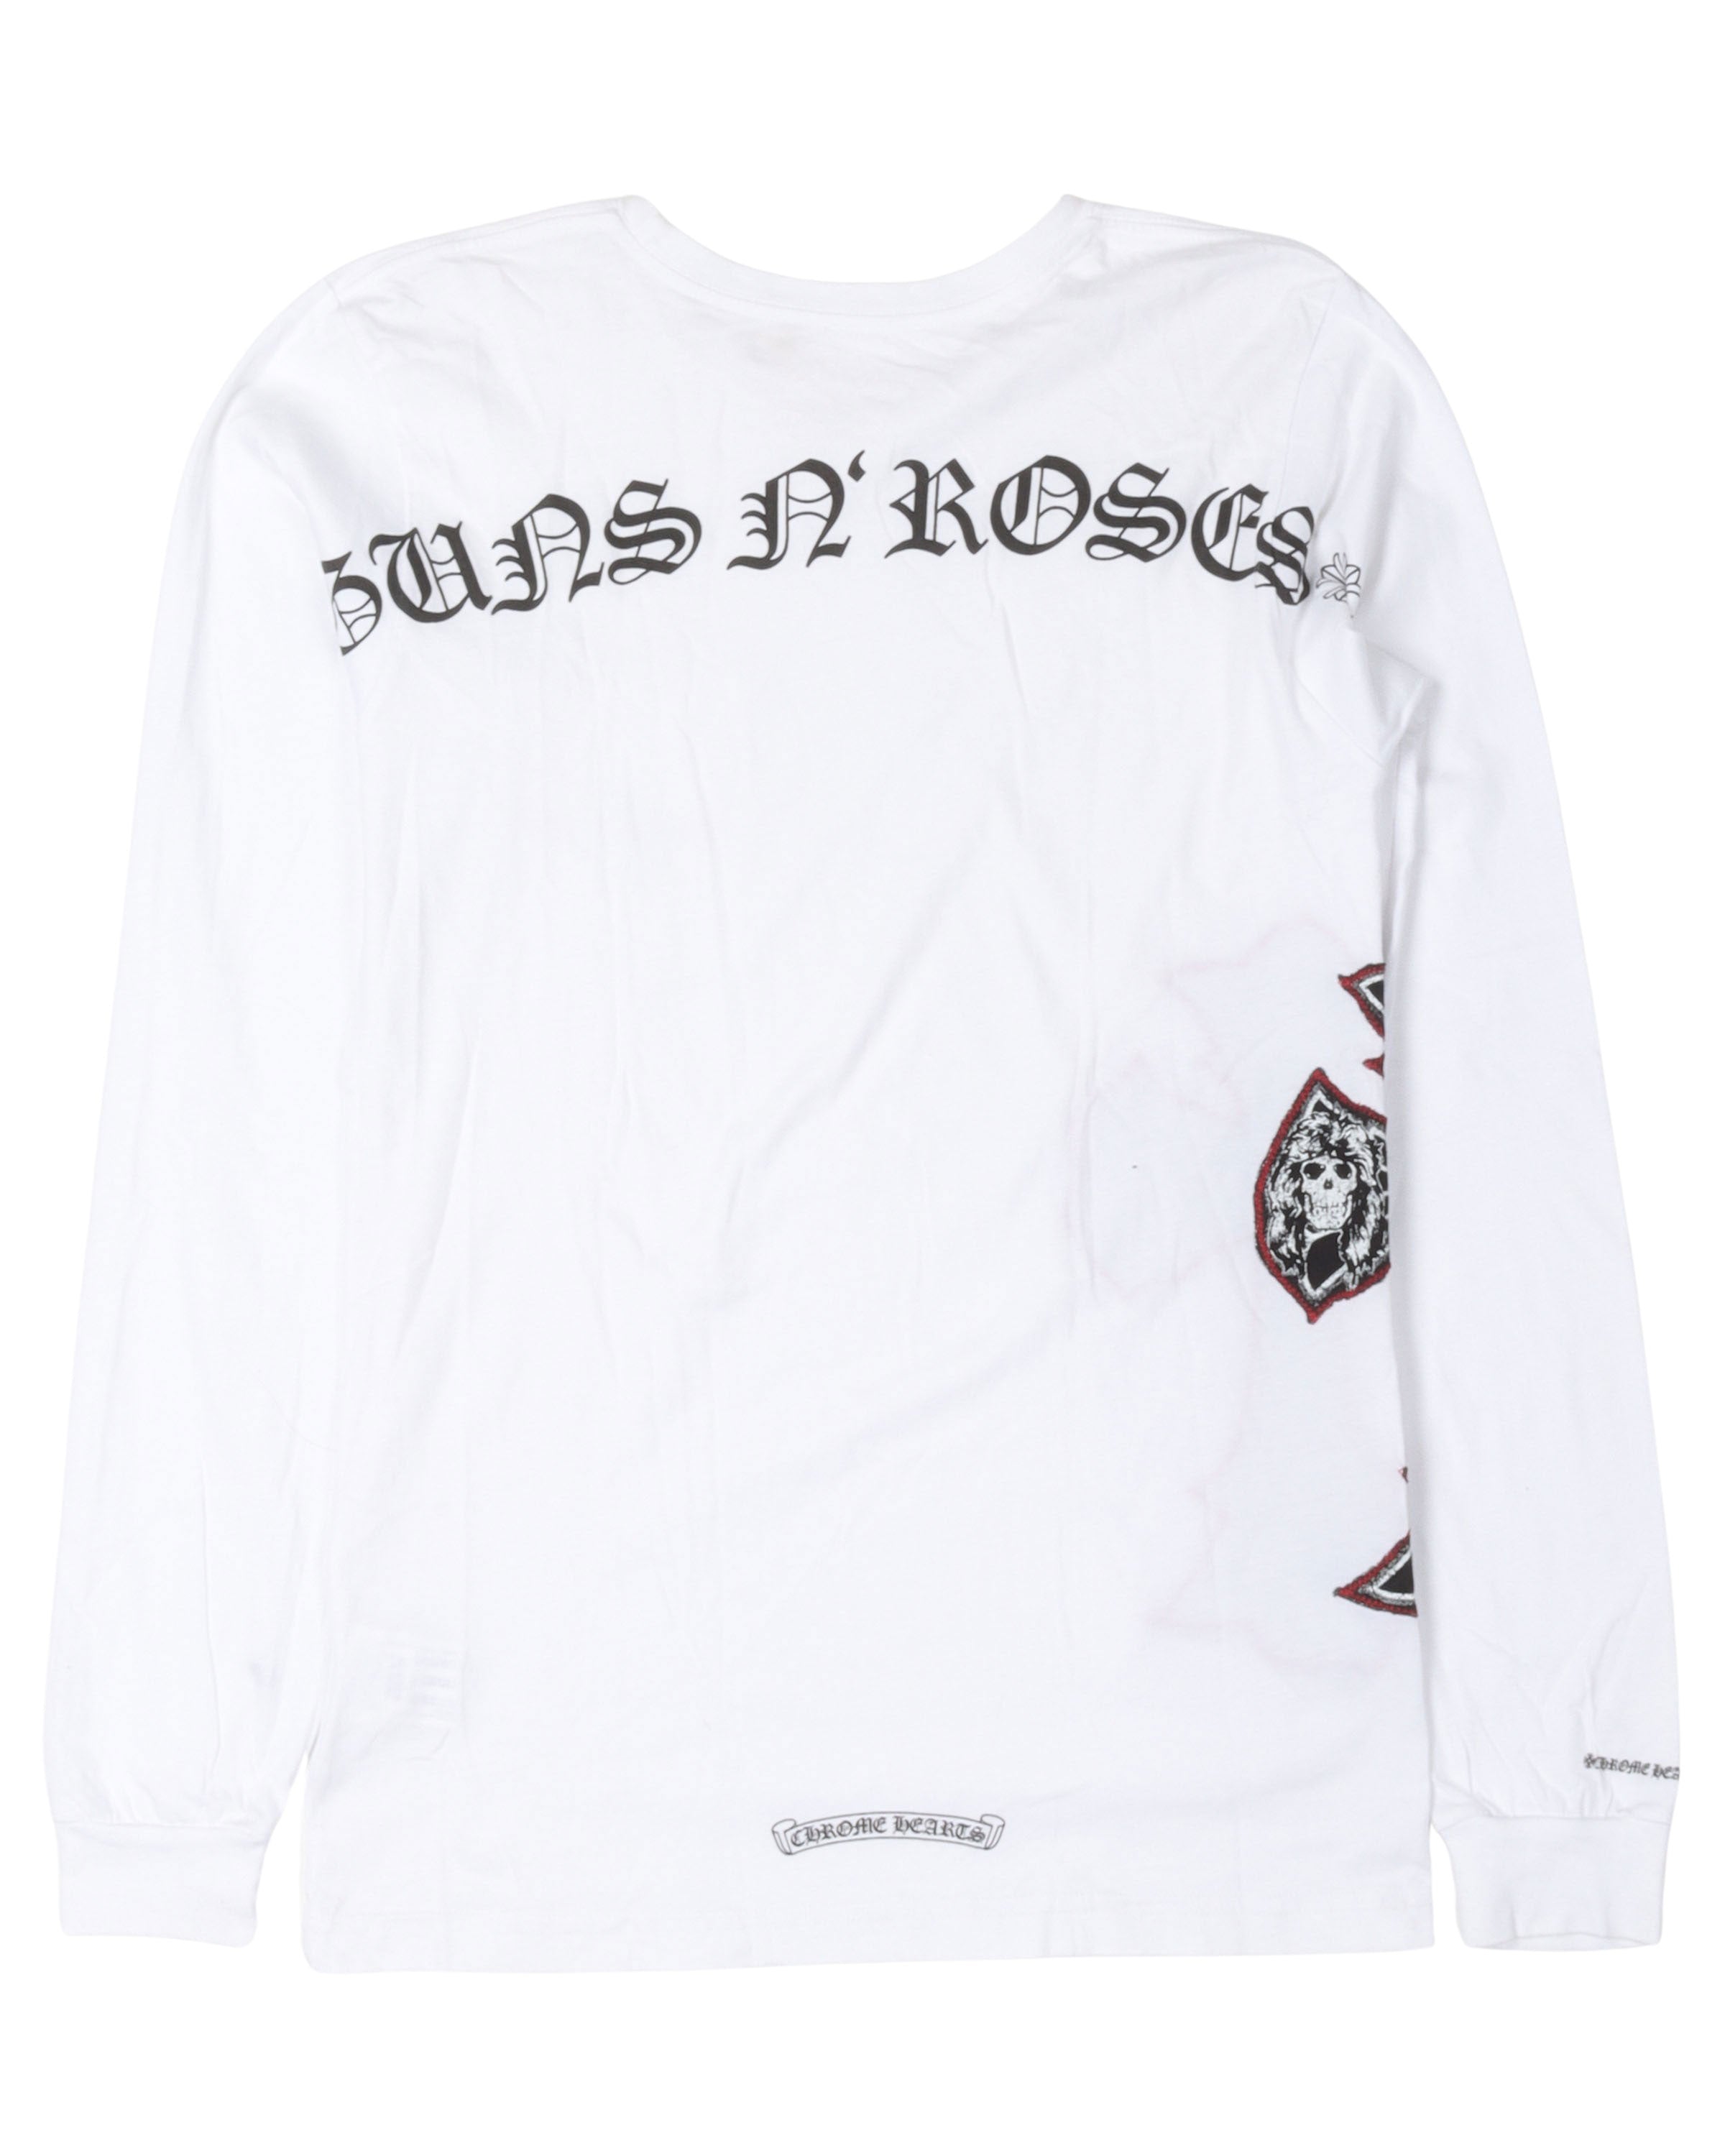 Guns N' Roses Long Sleeve T-Shirt